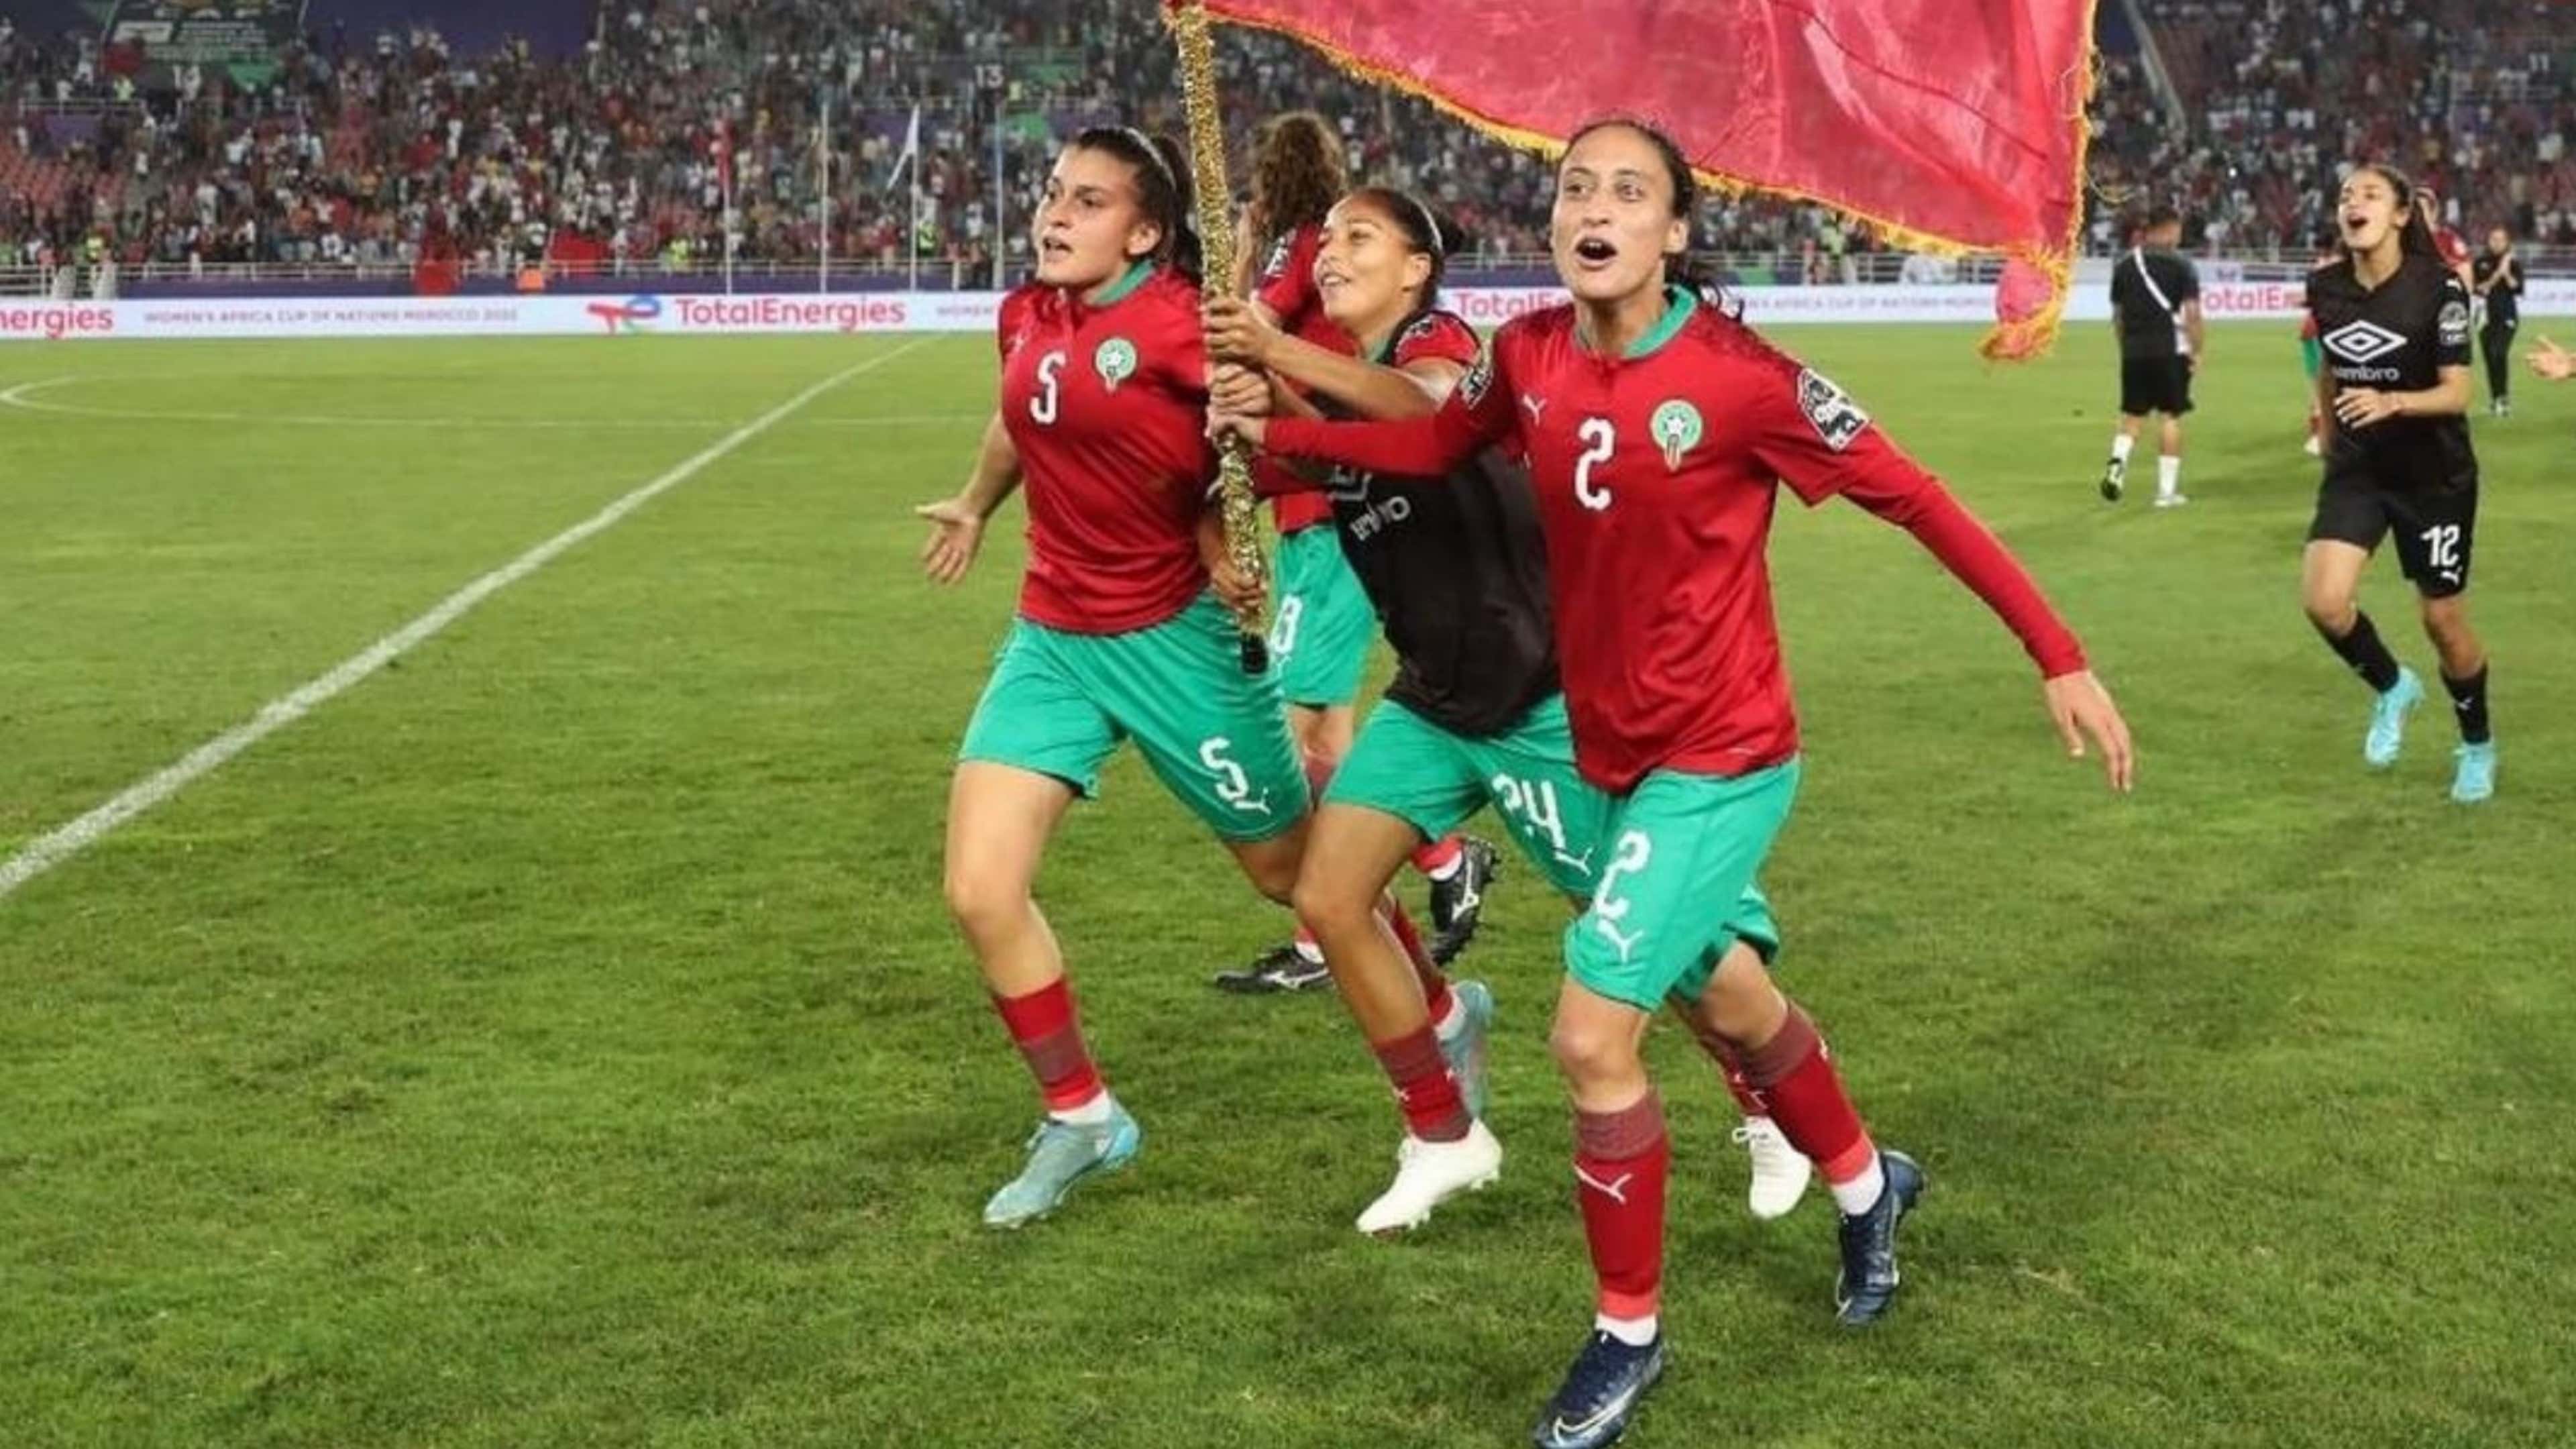 Morocco's women national team